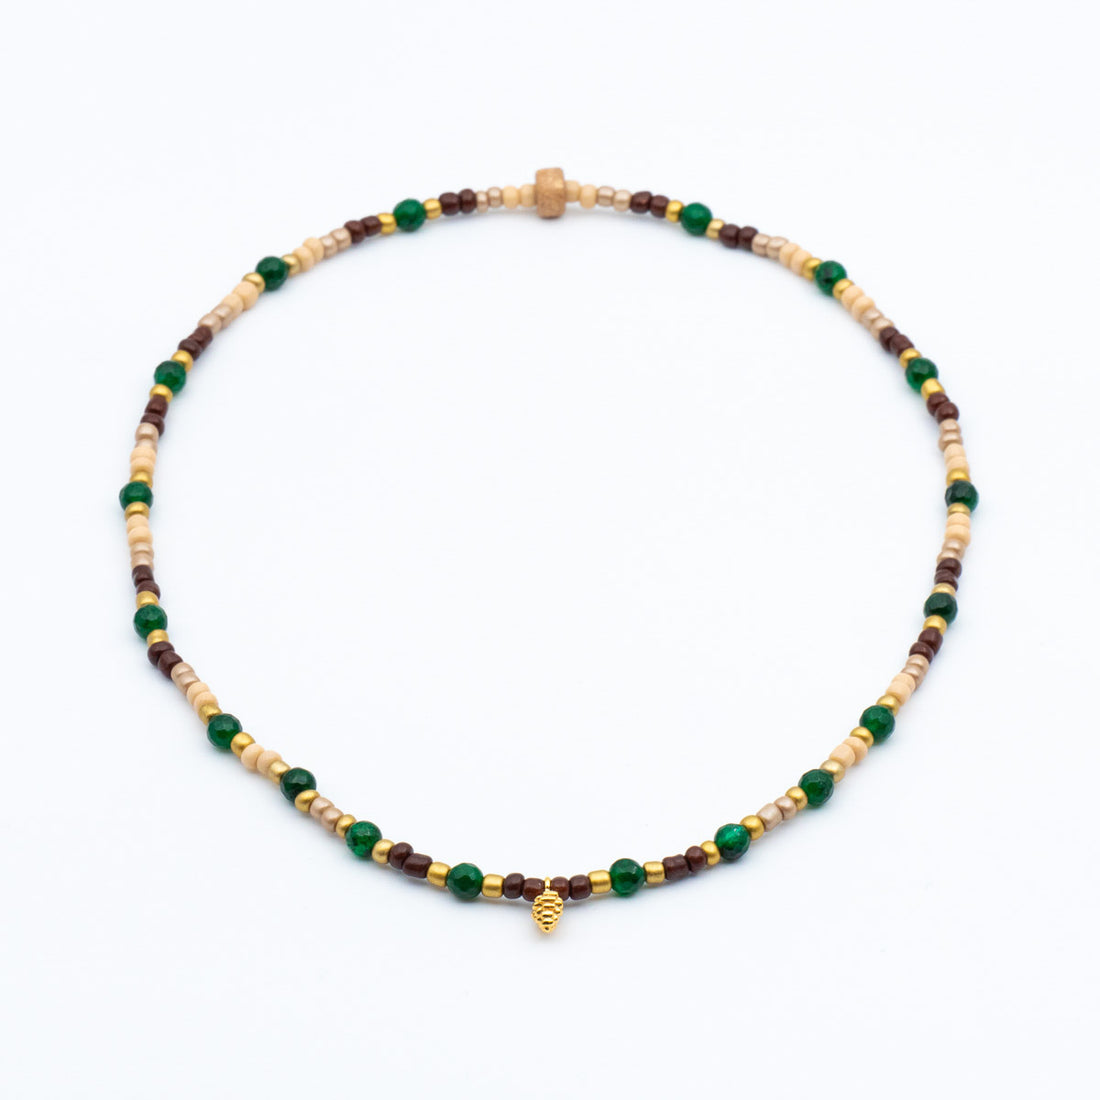 Necklace - Jade healing stone